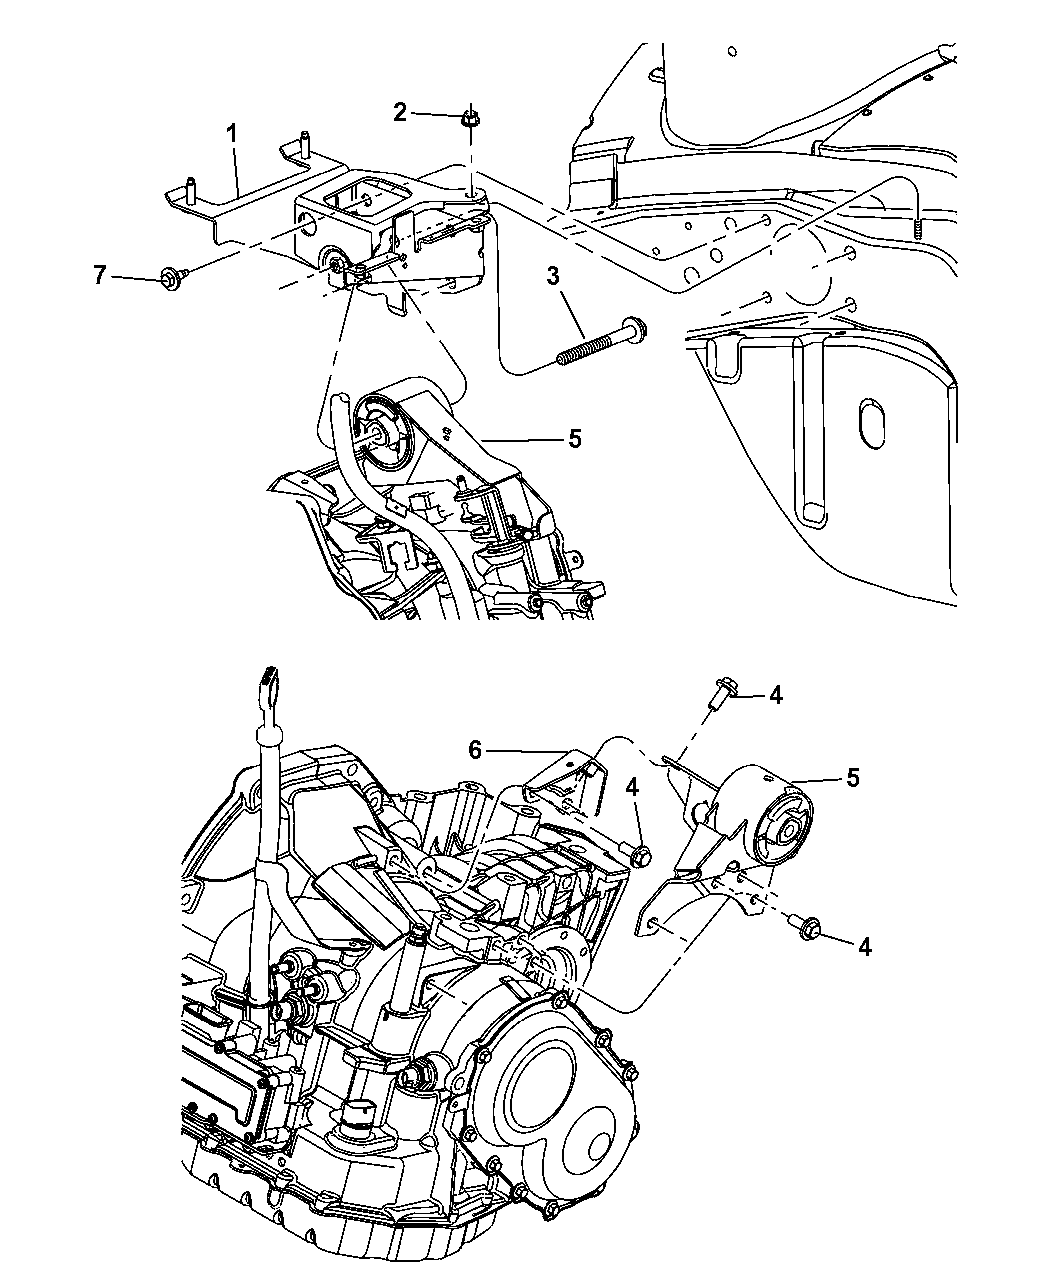 Wiring Diagram PDF: 2003 Dodge Neon Engine Diagram